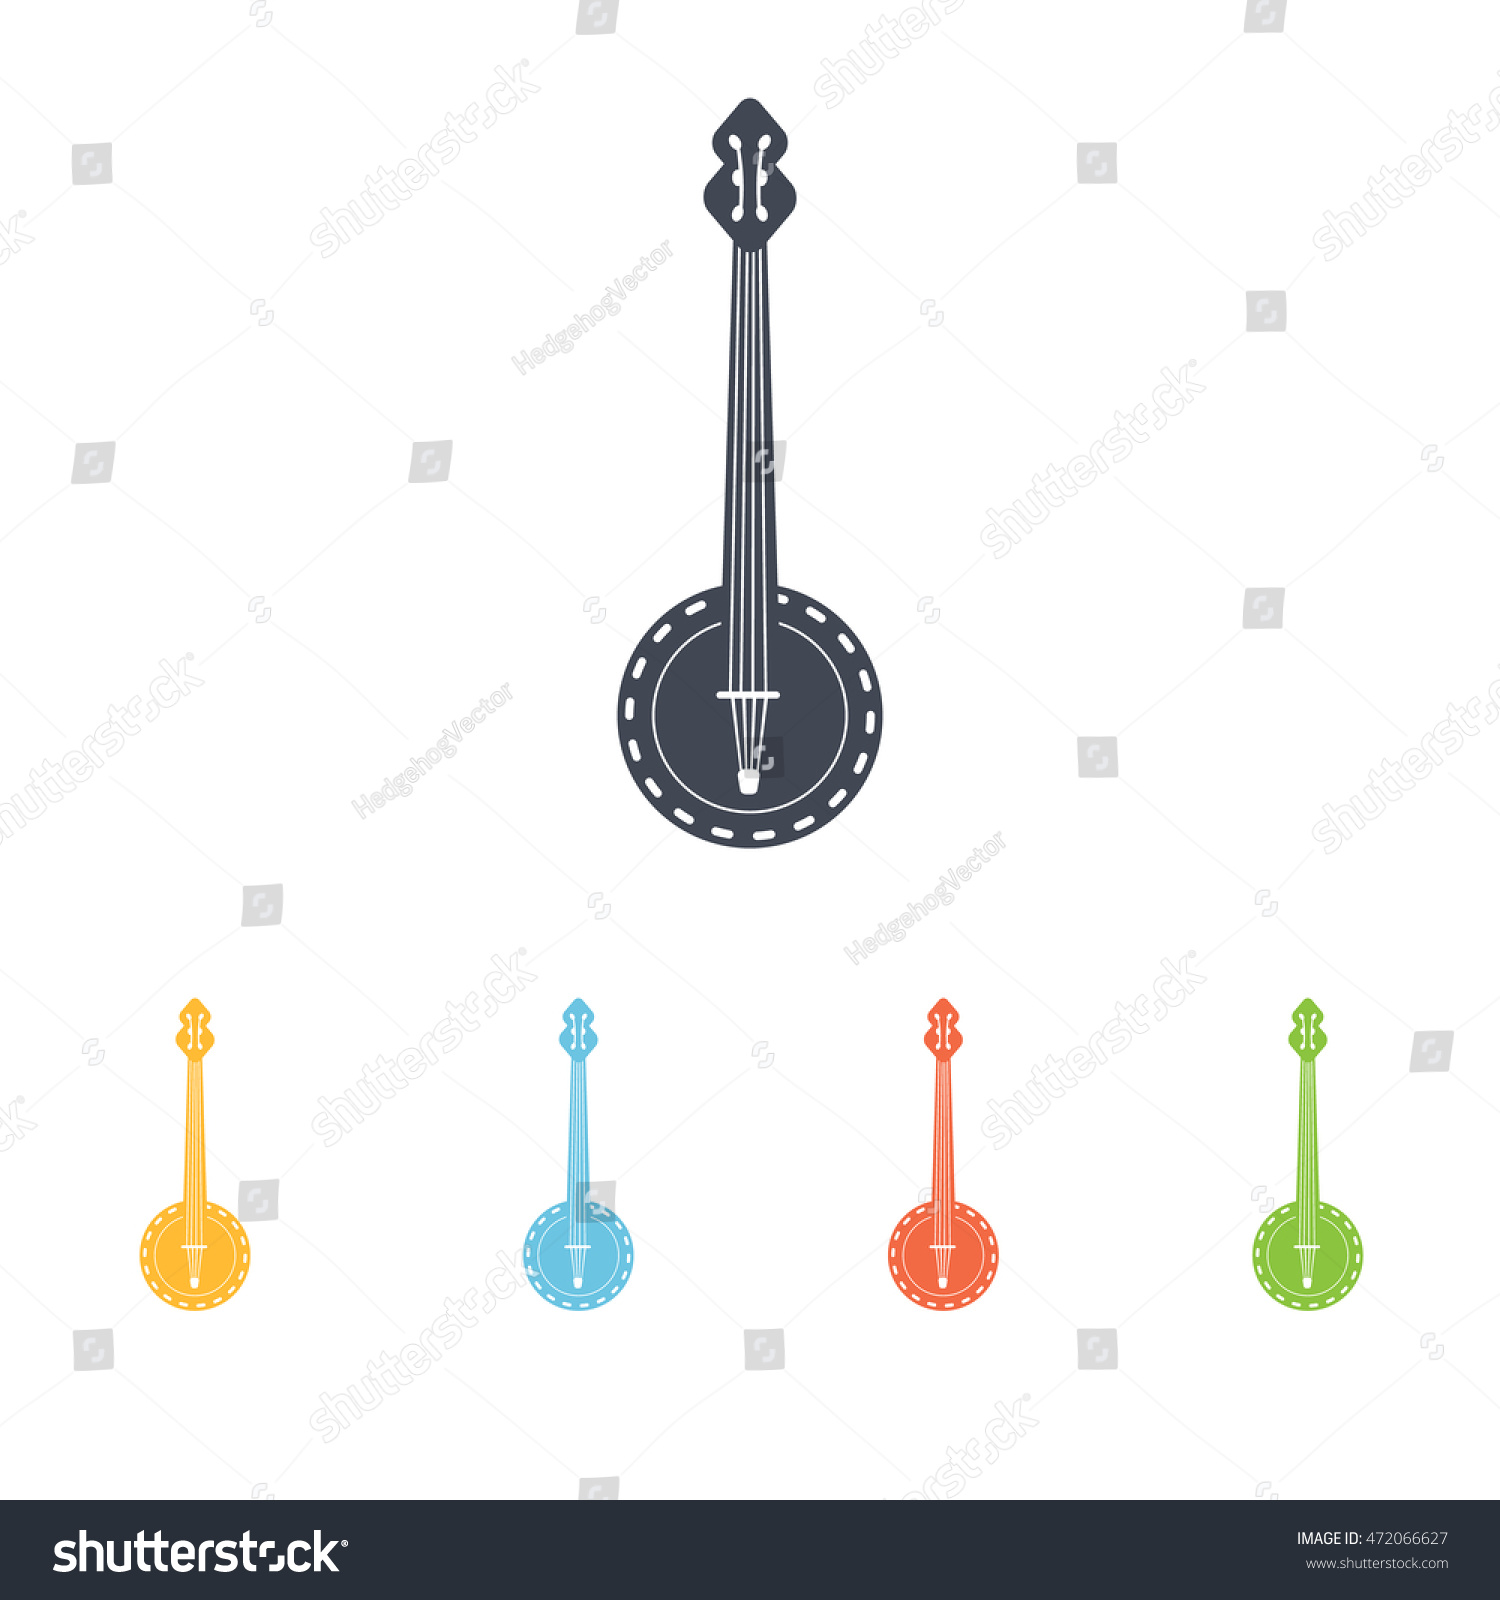 Italian mandolin icon in cartoon style isolated on